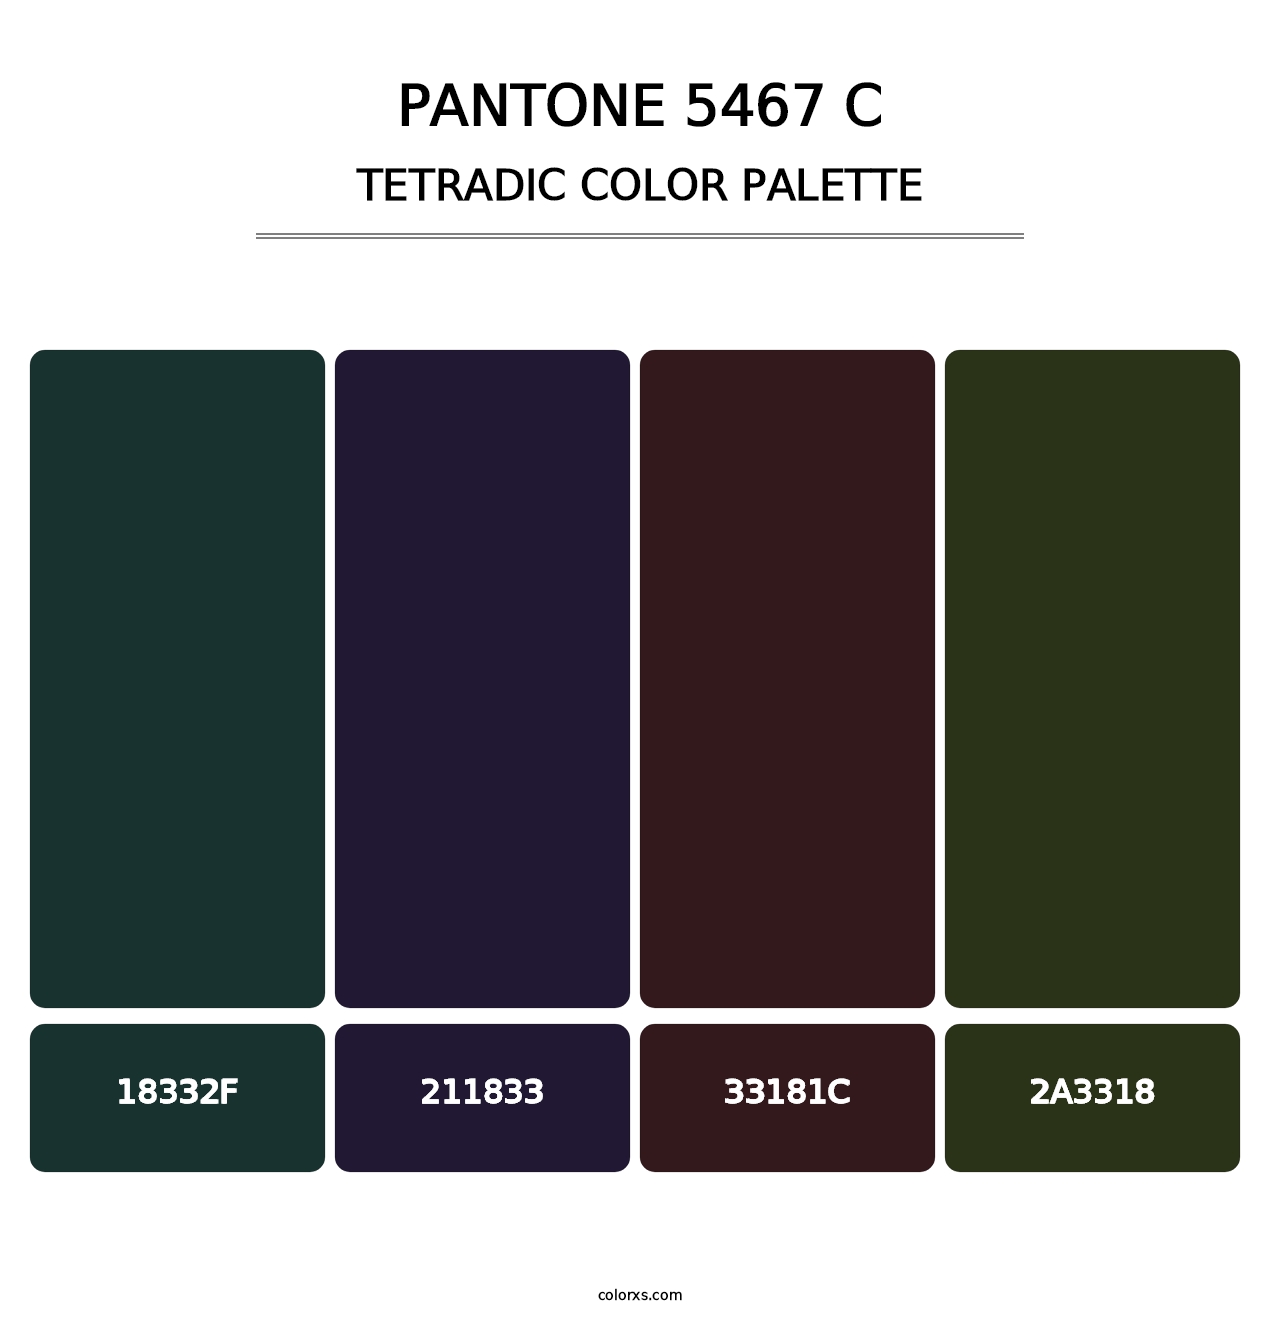 PANTONE 5467 C - Tetradic Color Palette